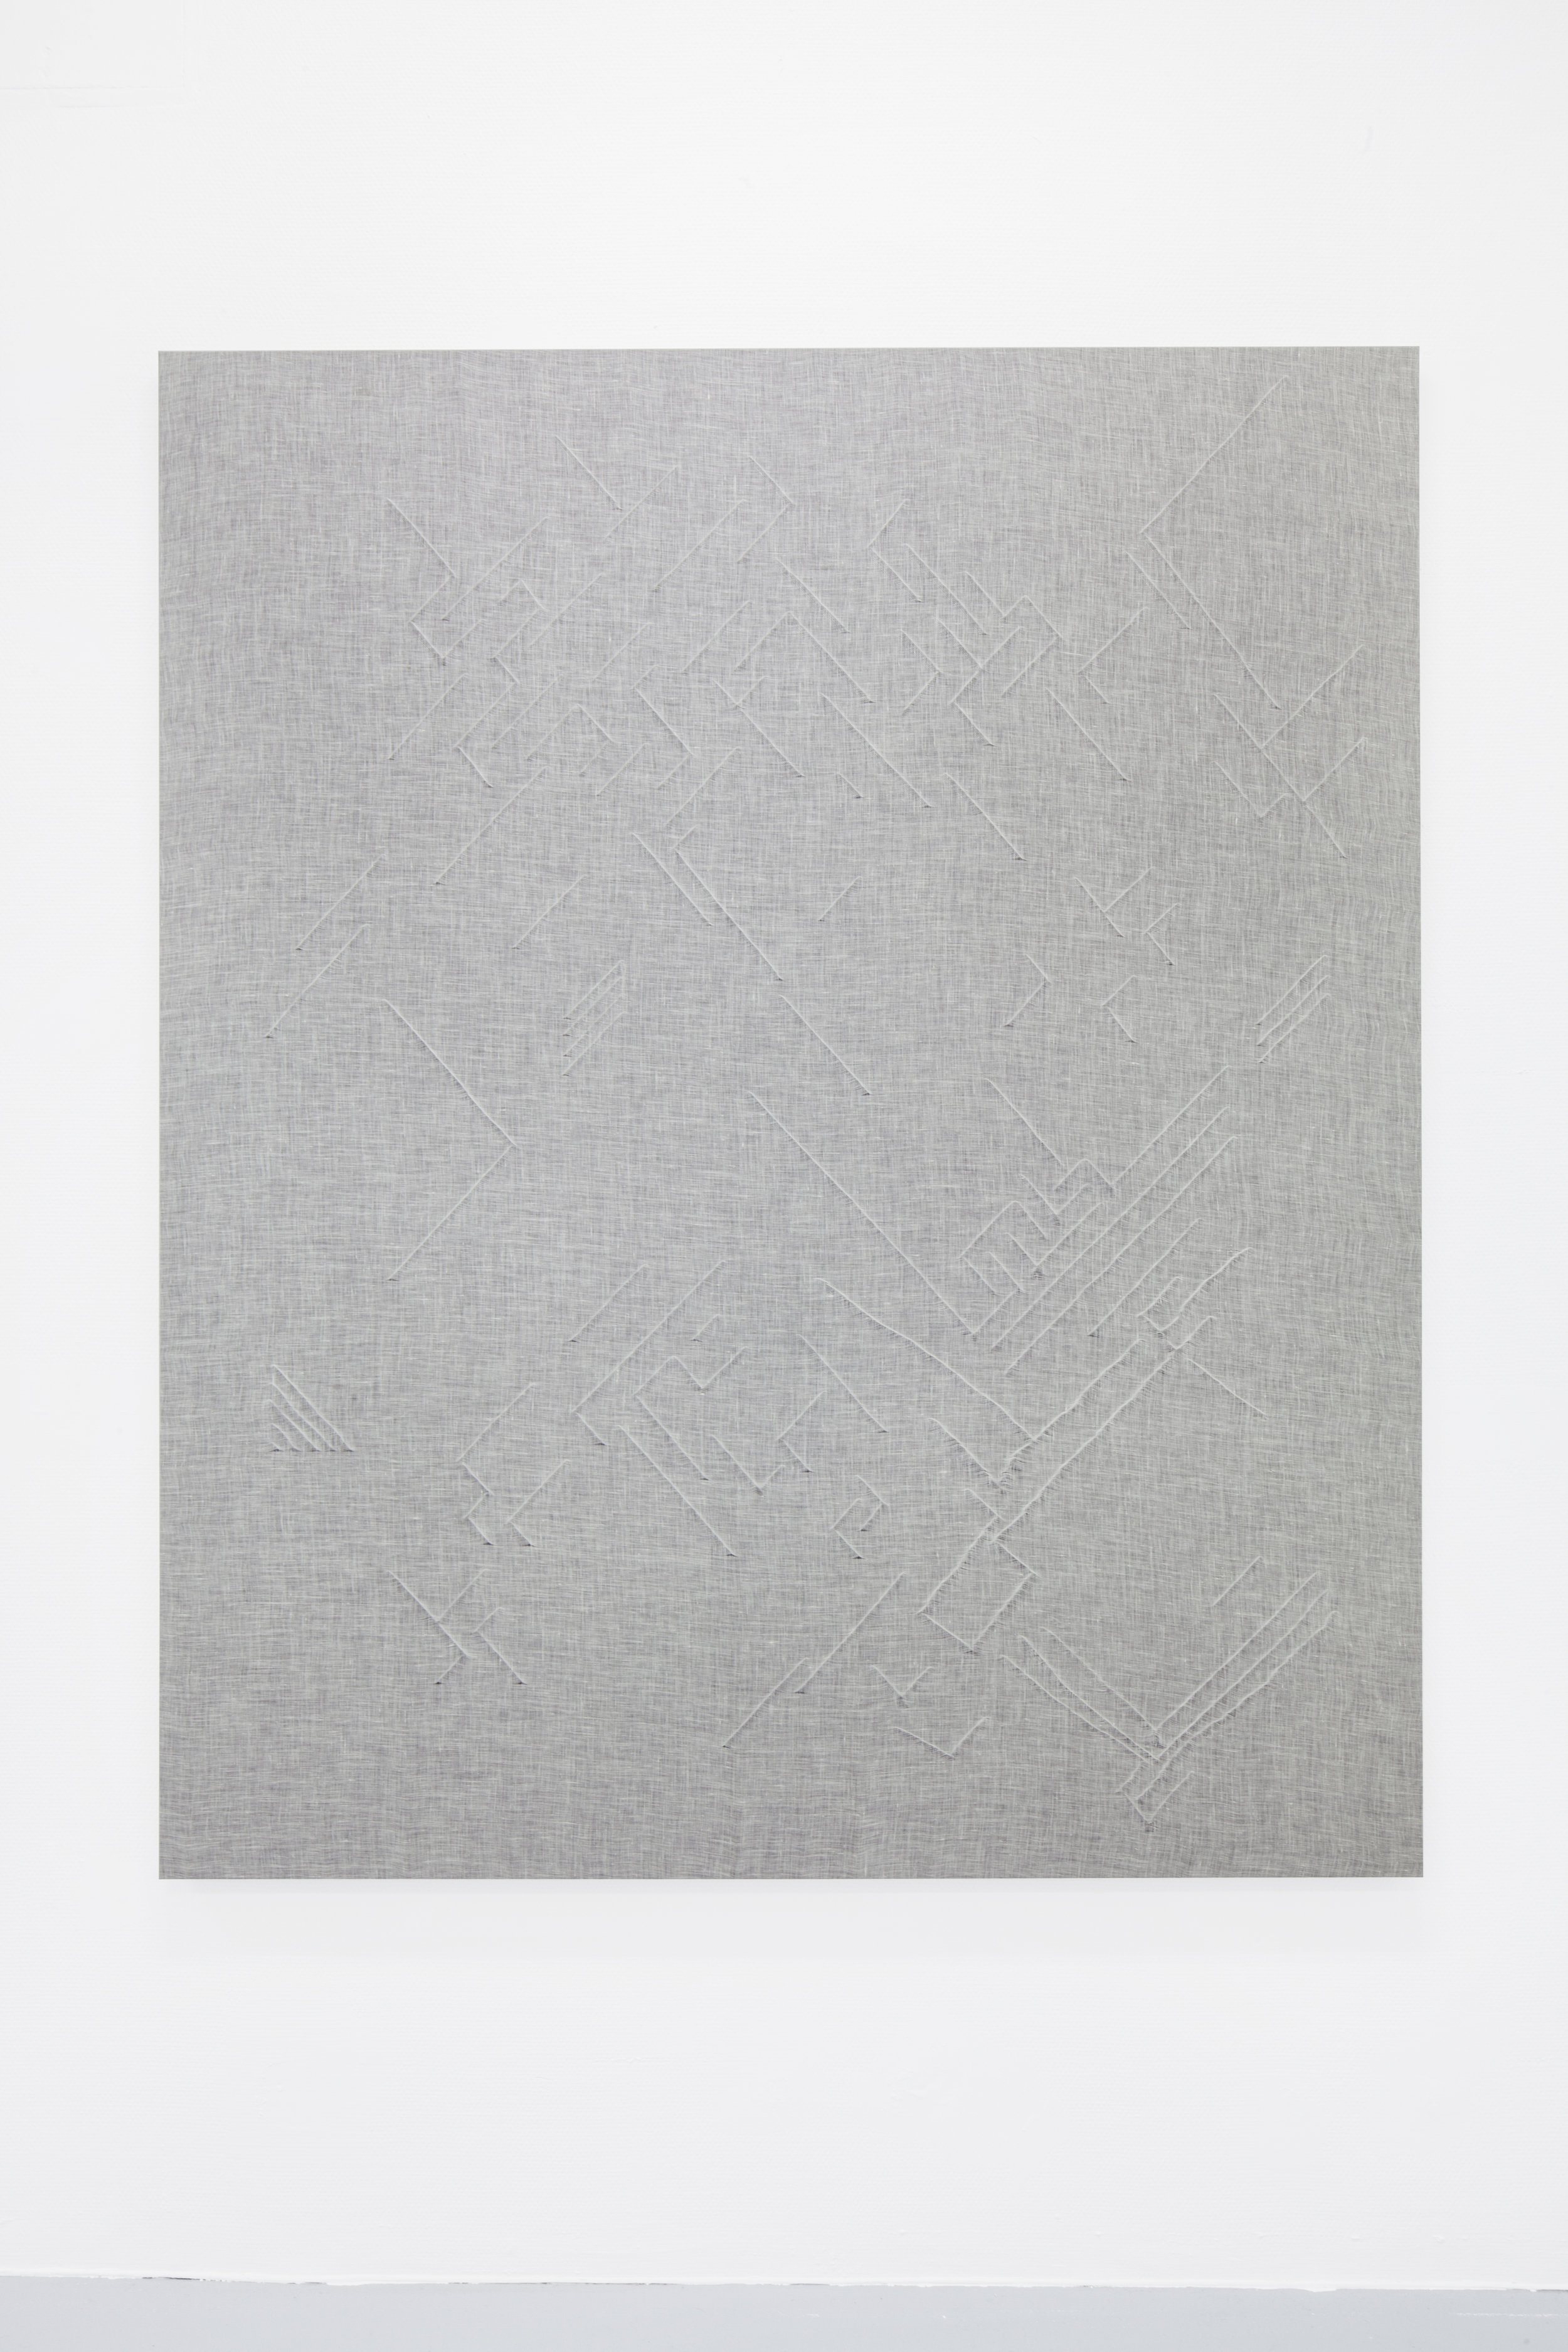  Cortex, muslin fabric, cotton canvas wooden frame, 2016 